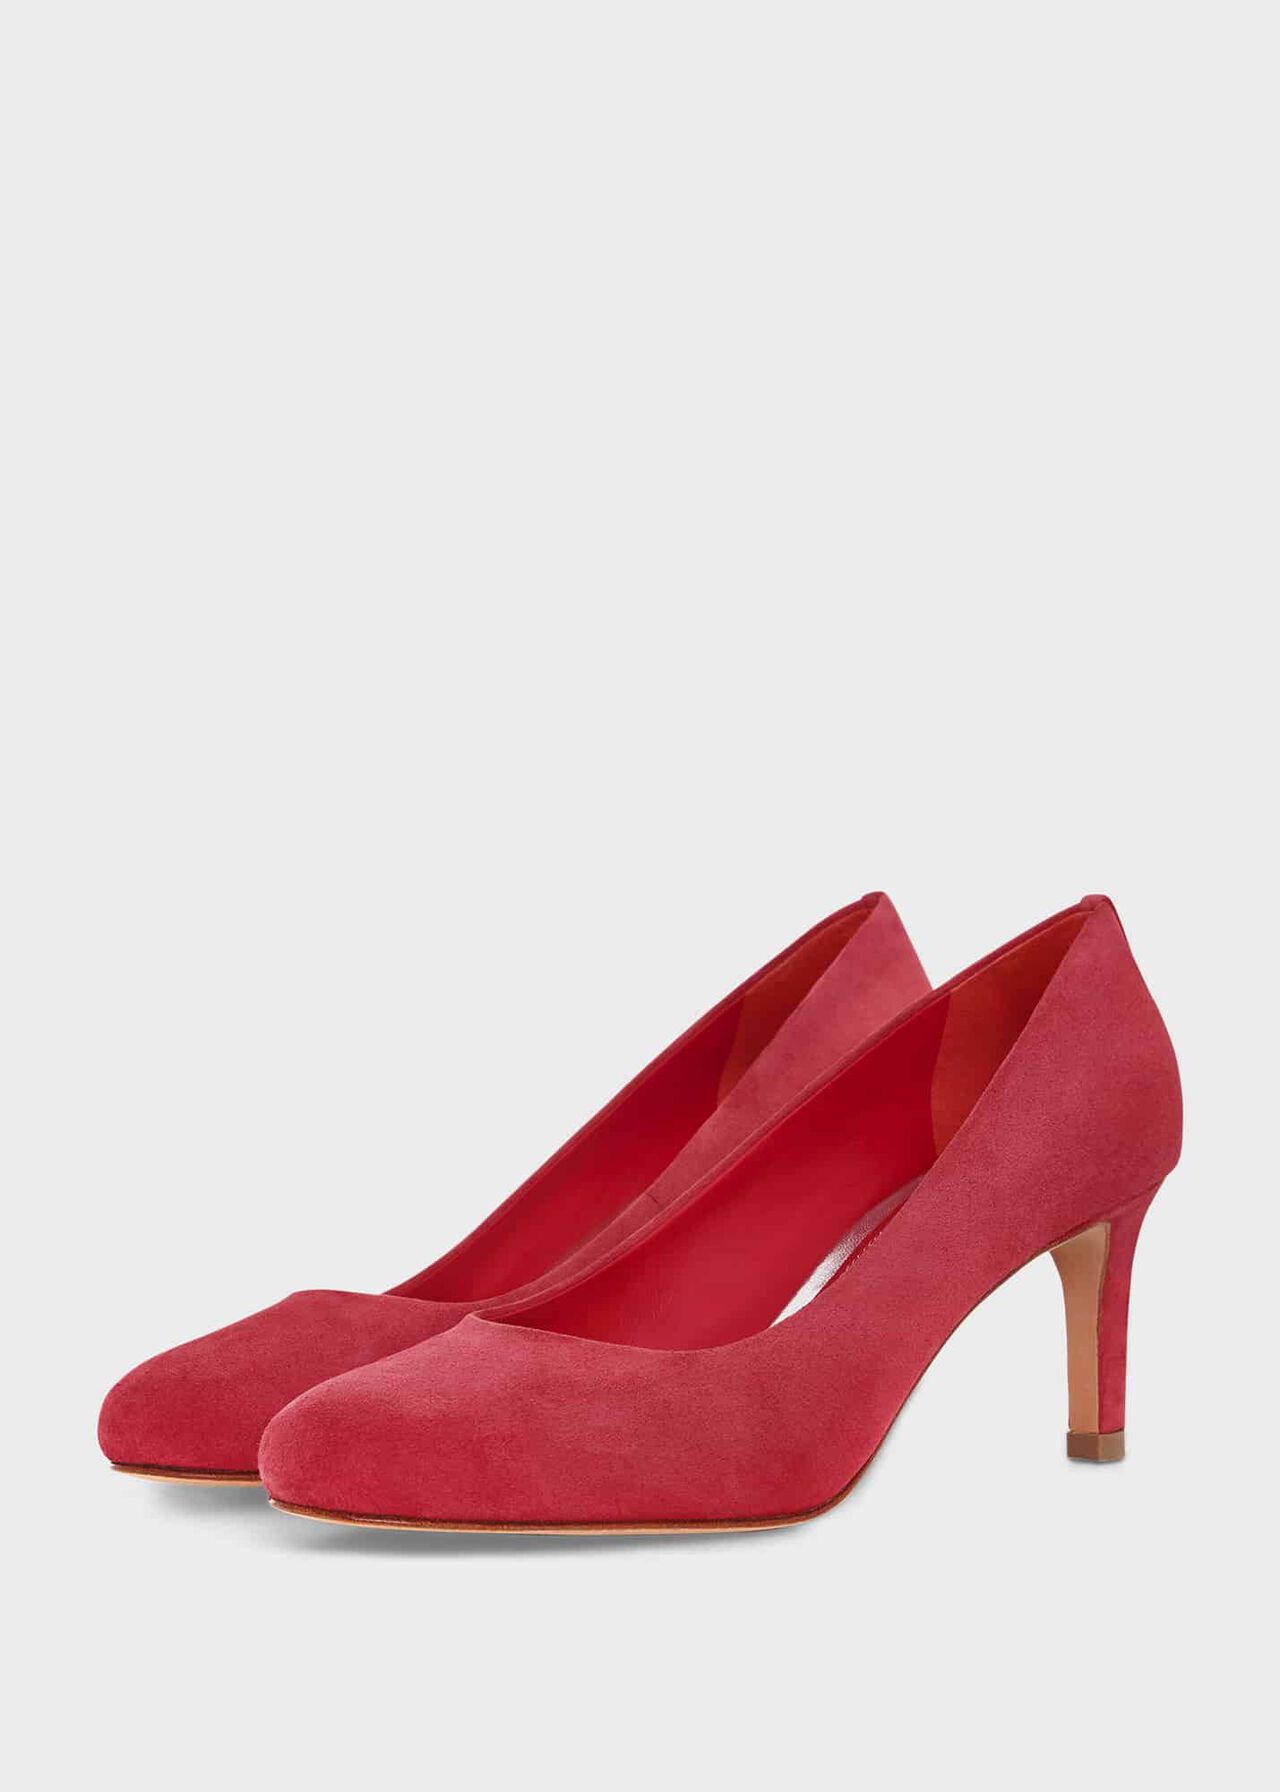 Lizzie Court Shoes, Rouge Pink, hi-res